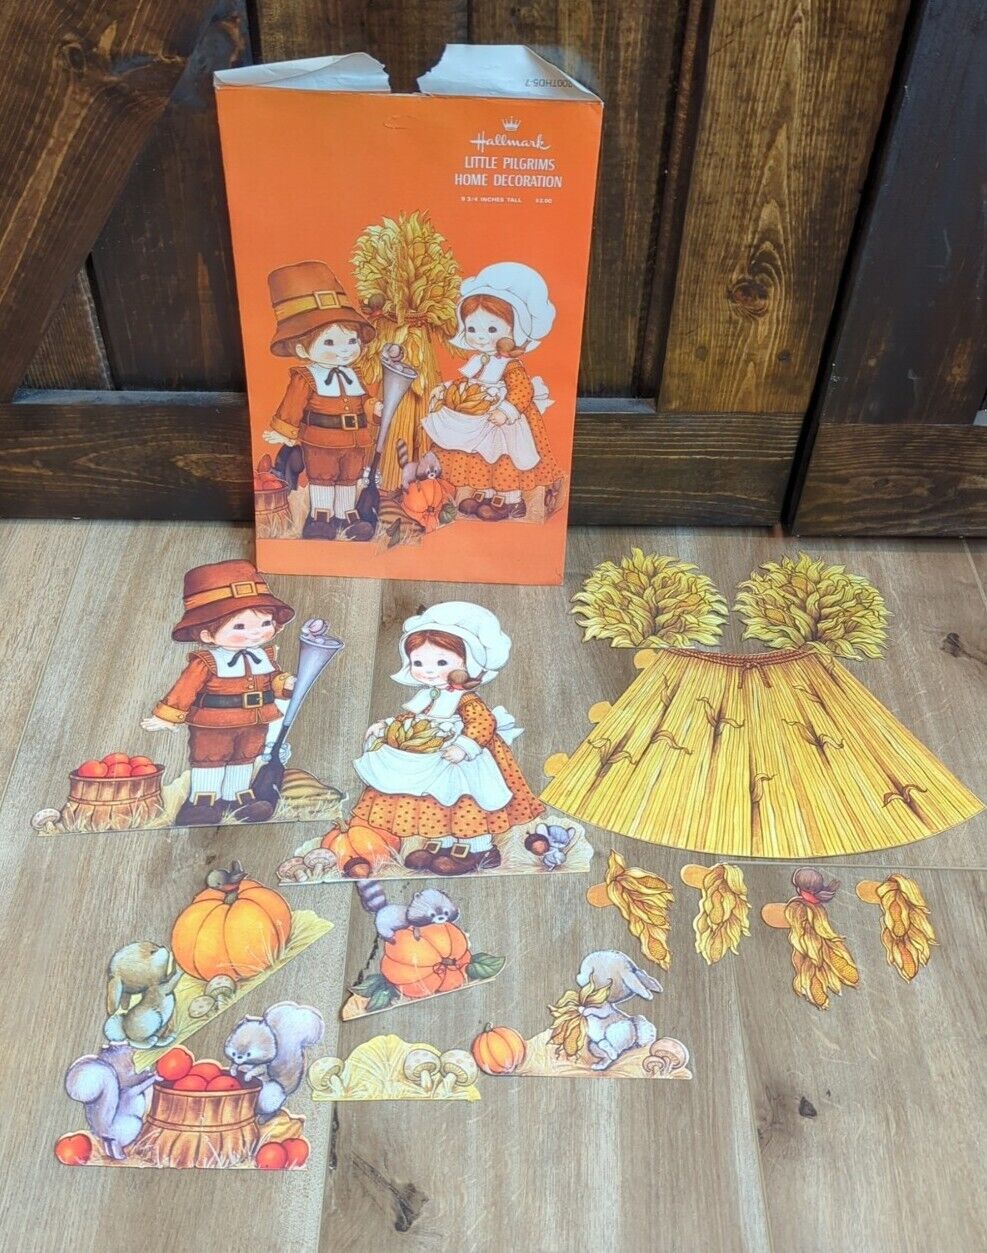 VTG Hallmark Little Pilgrims Centerpiece Home Decoration - Harvest Fall Die Cut